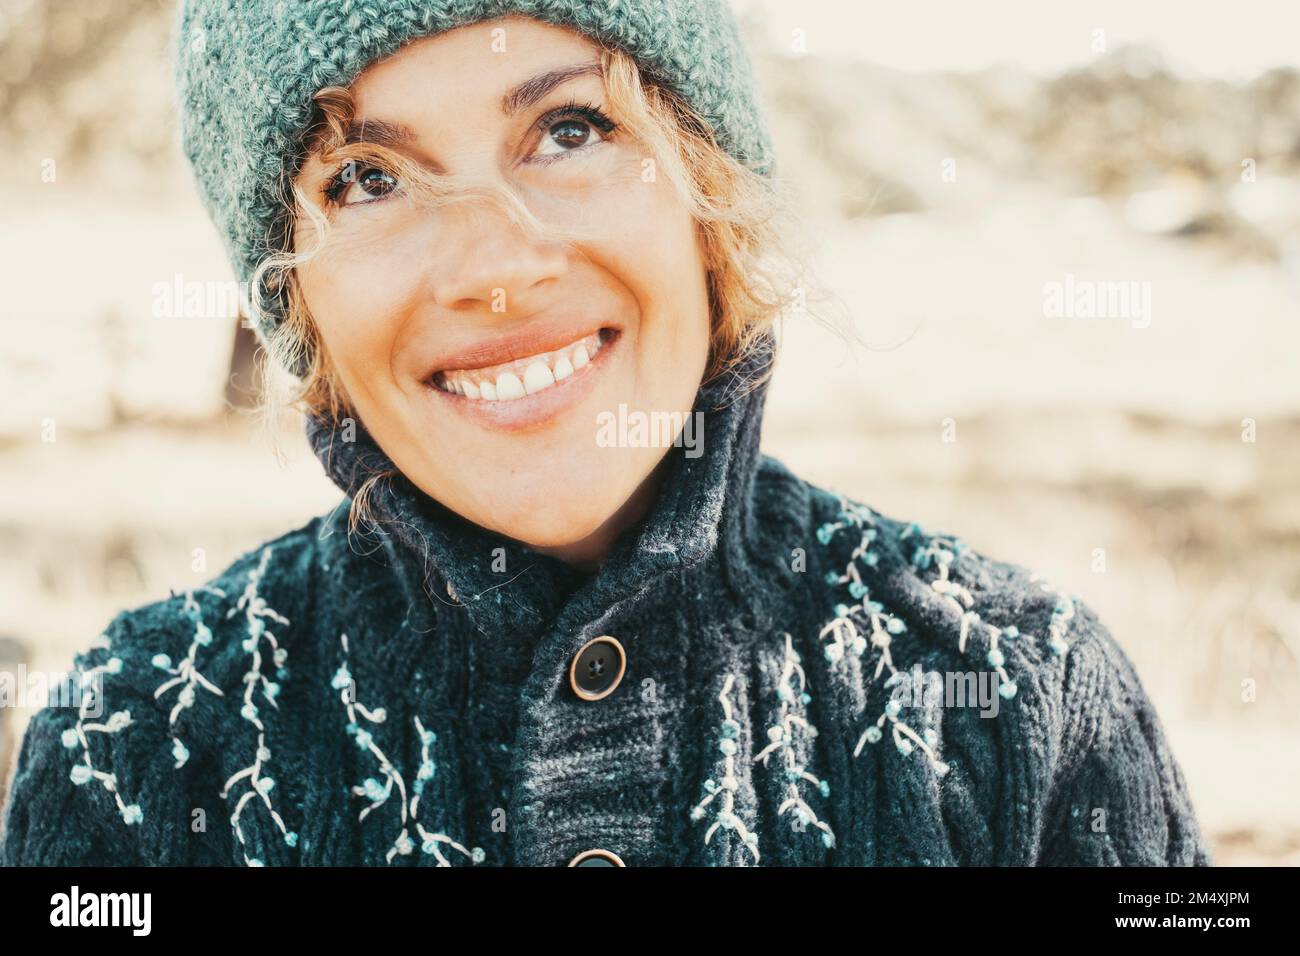 Mujer madura reflexiva con sonrisa dentada con ropa cálida Foto de stock